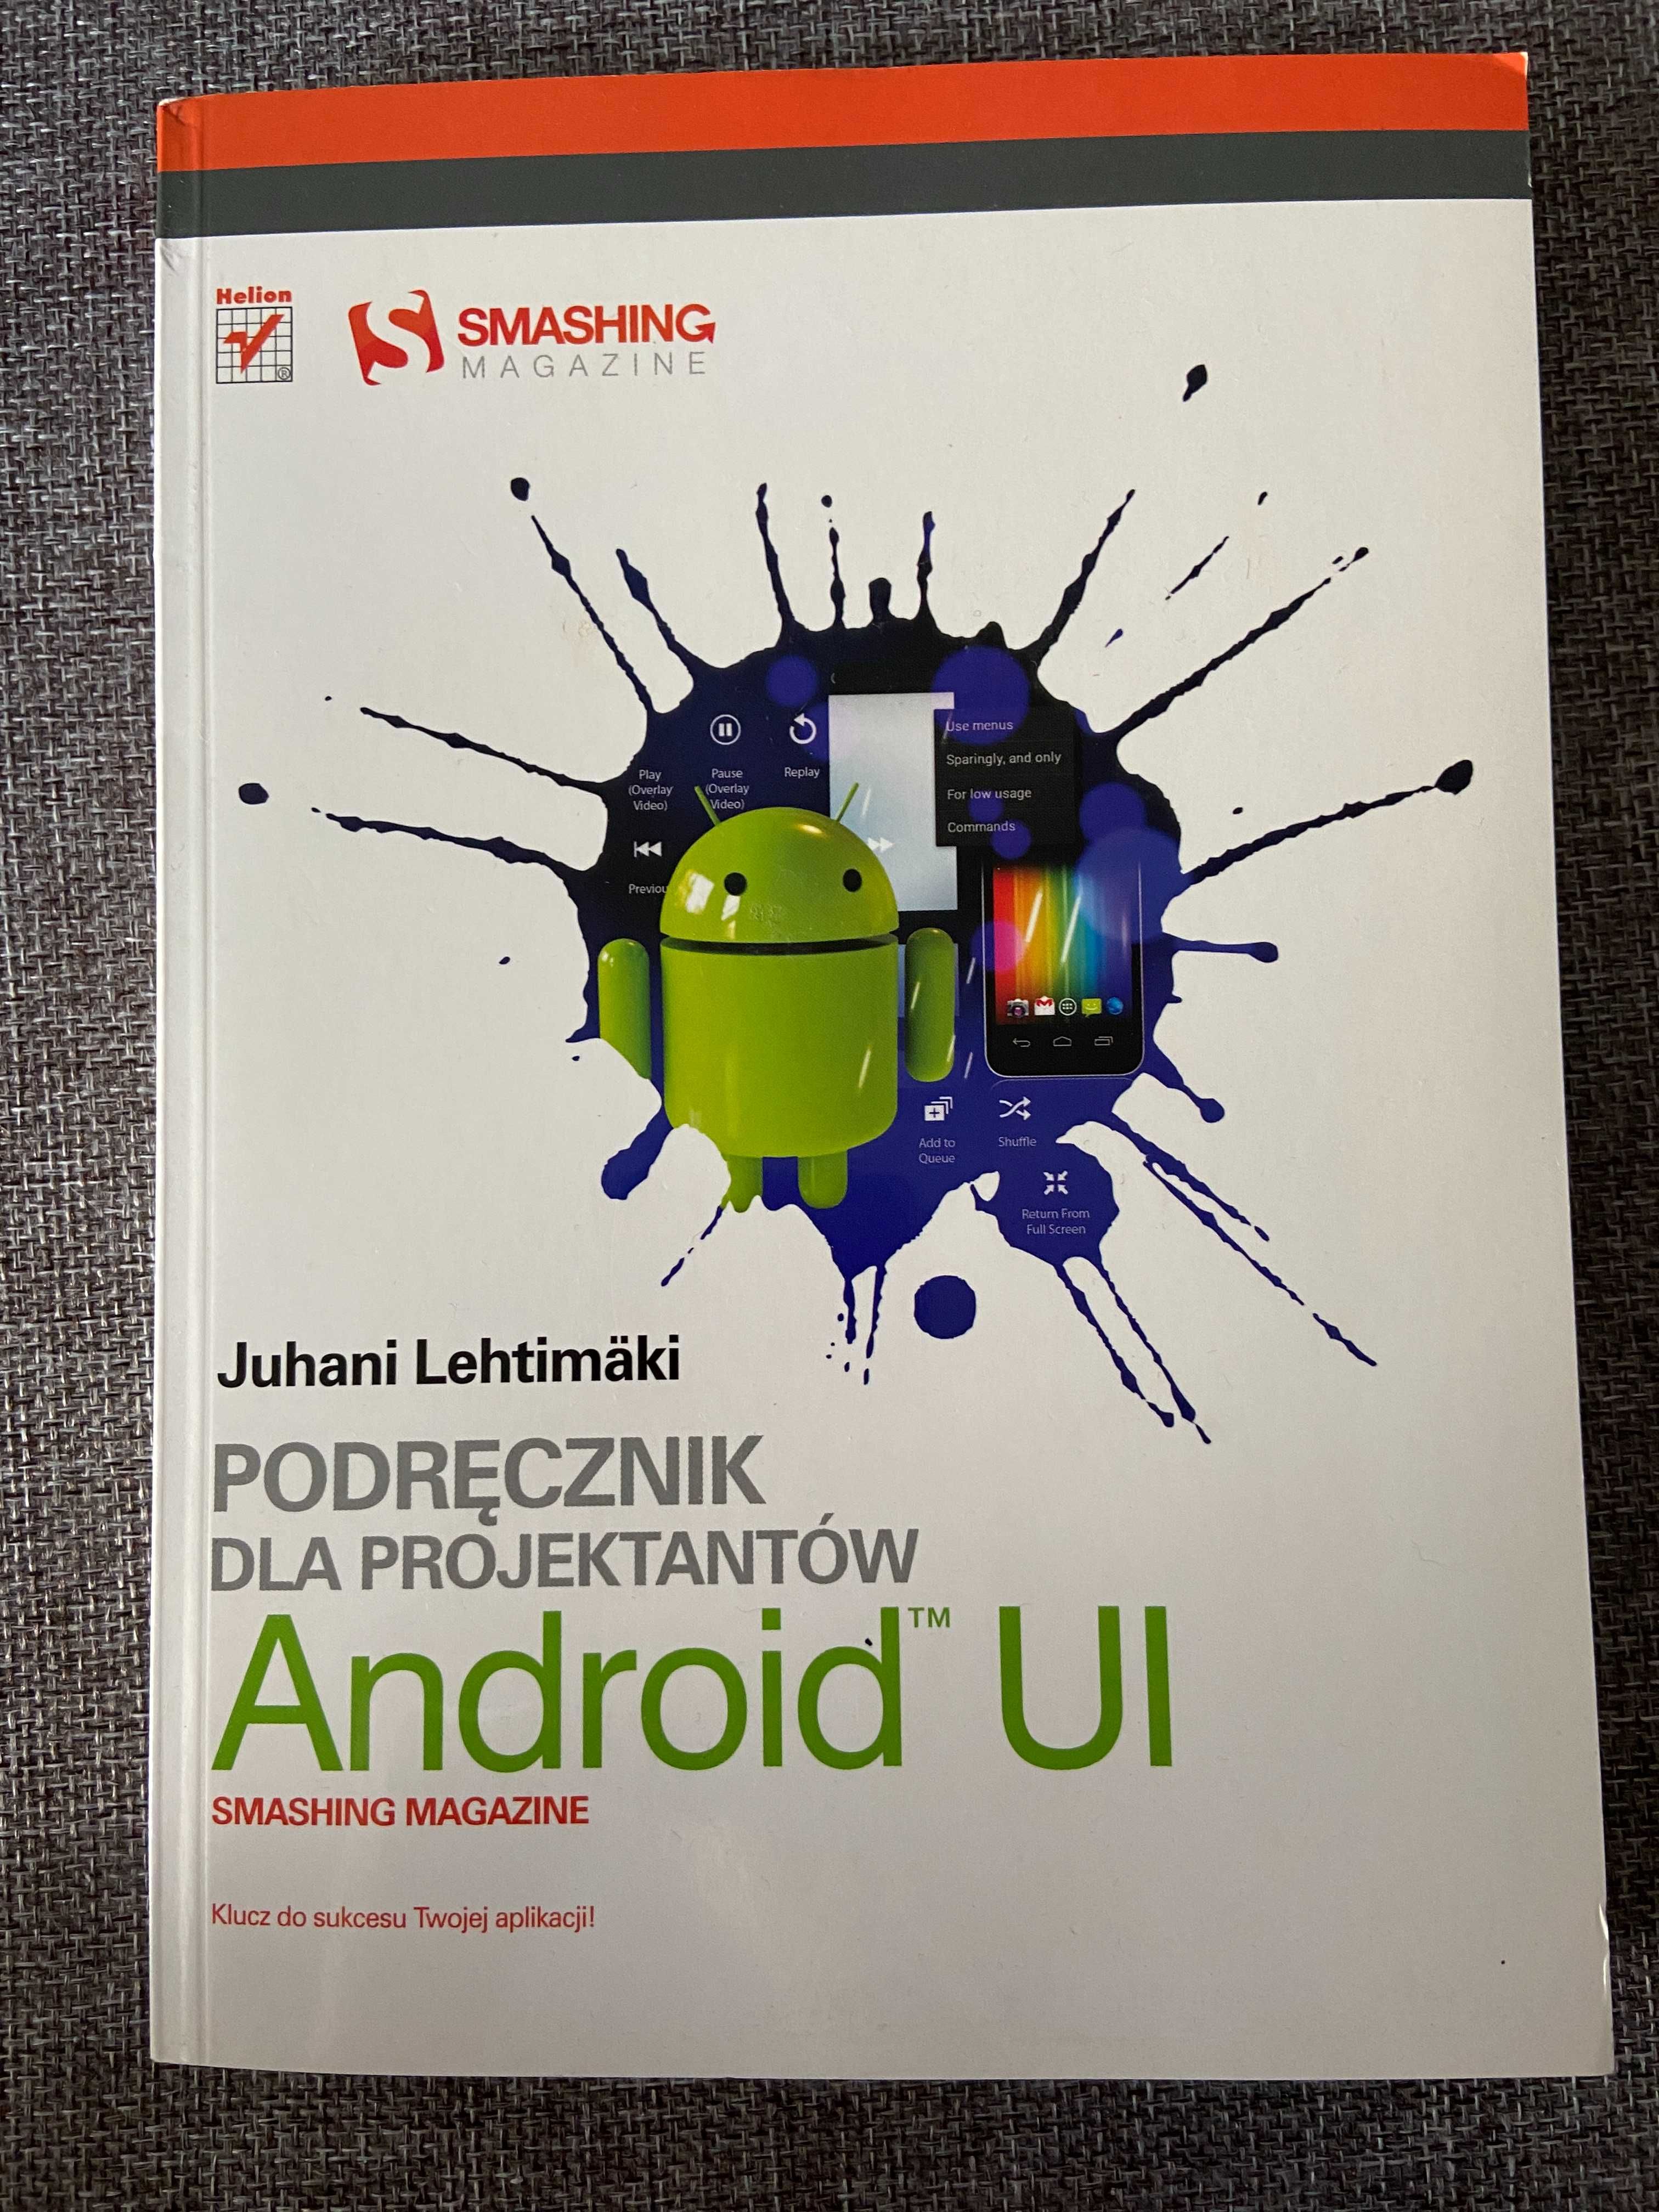 Android UI Podręcznik dla projektantów Juhani Lehtimaki